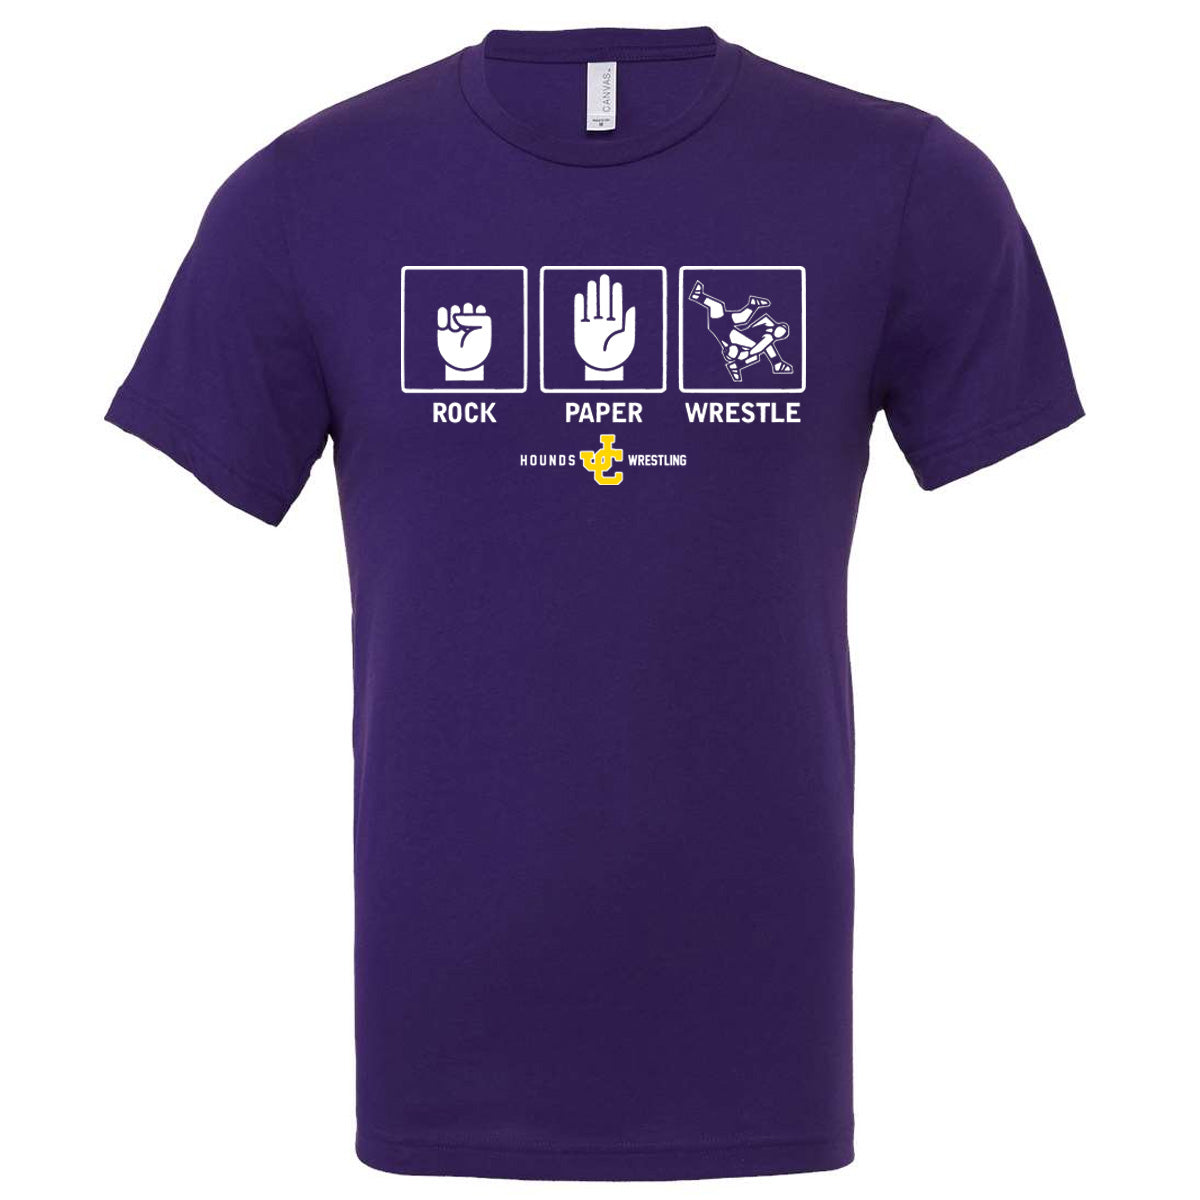 Jones County - Rock Paper Wrestle - Team Purple (Tee/DriFit/Hoodie/Sweatshirt) - Southern Grace Creations